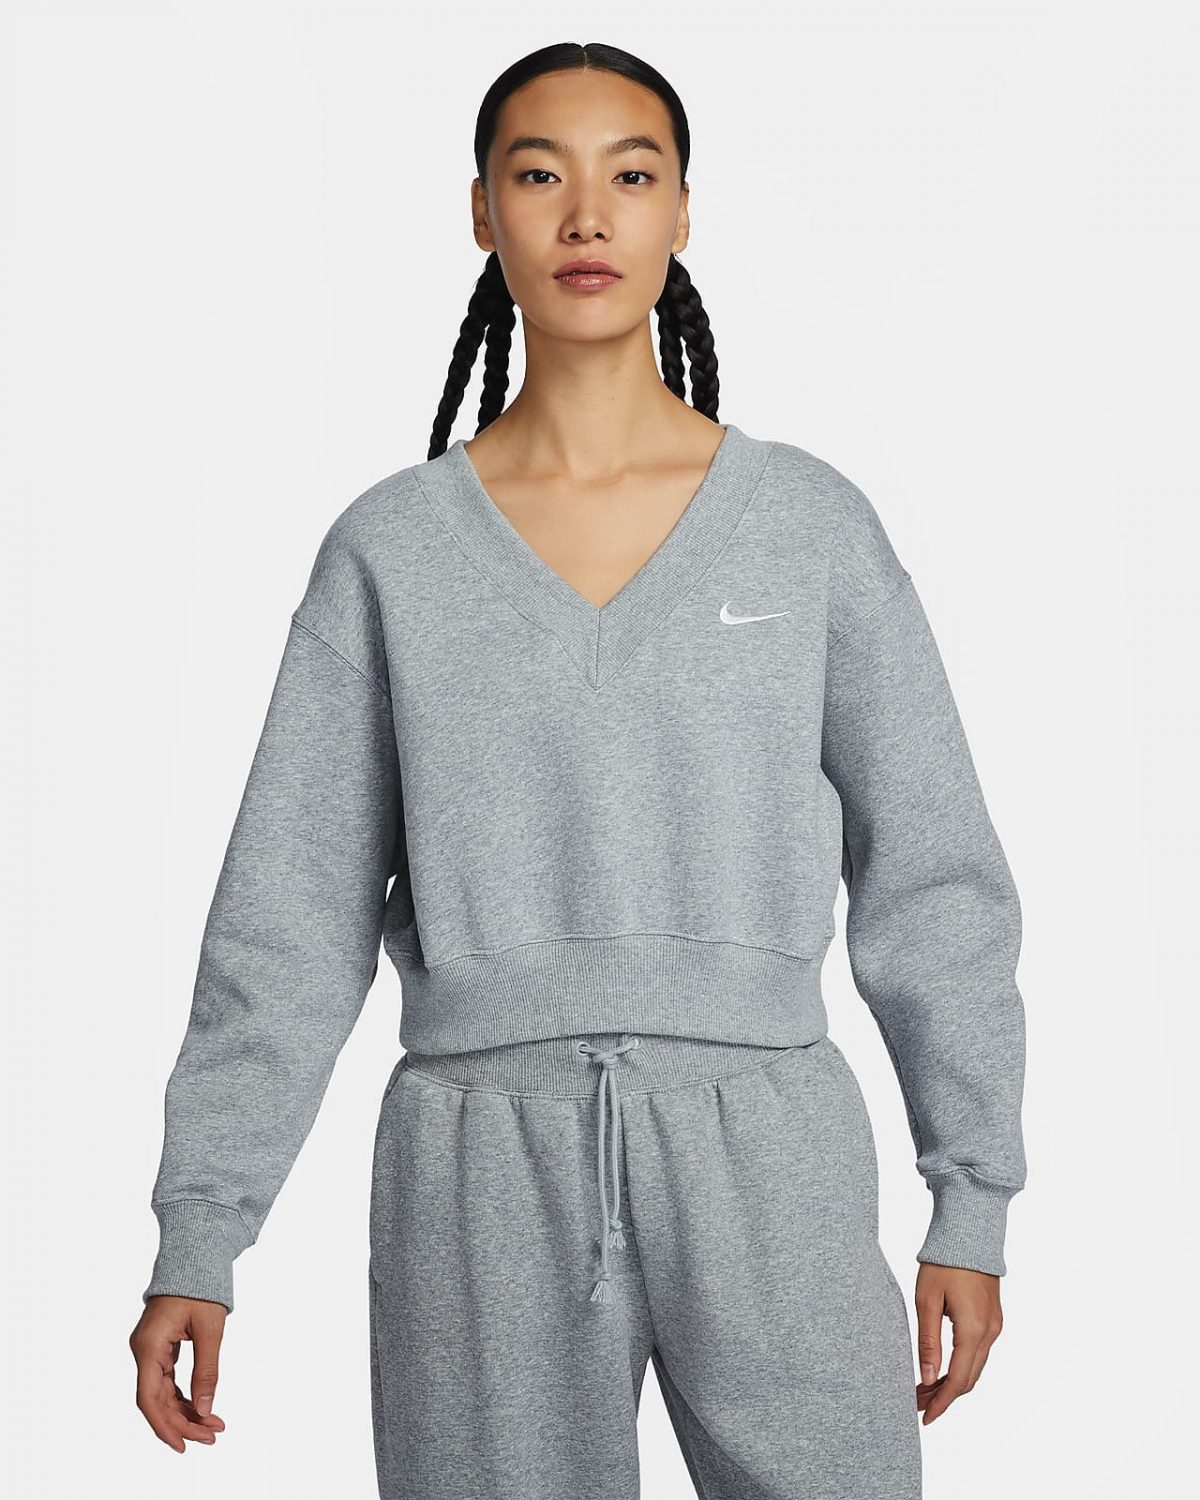 Женский топ Nike Sportswear Phoenix Fleece серый фото